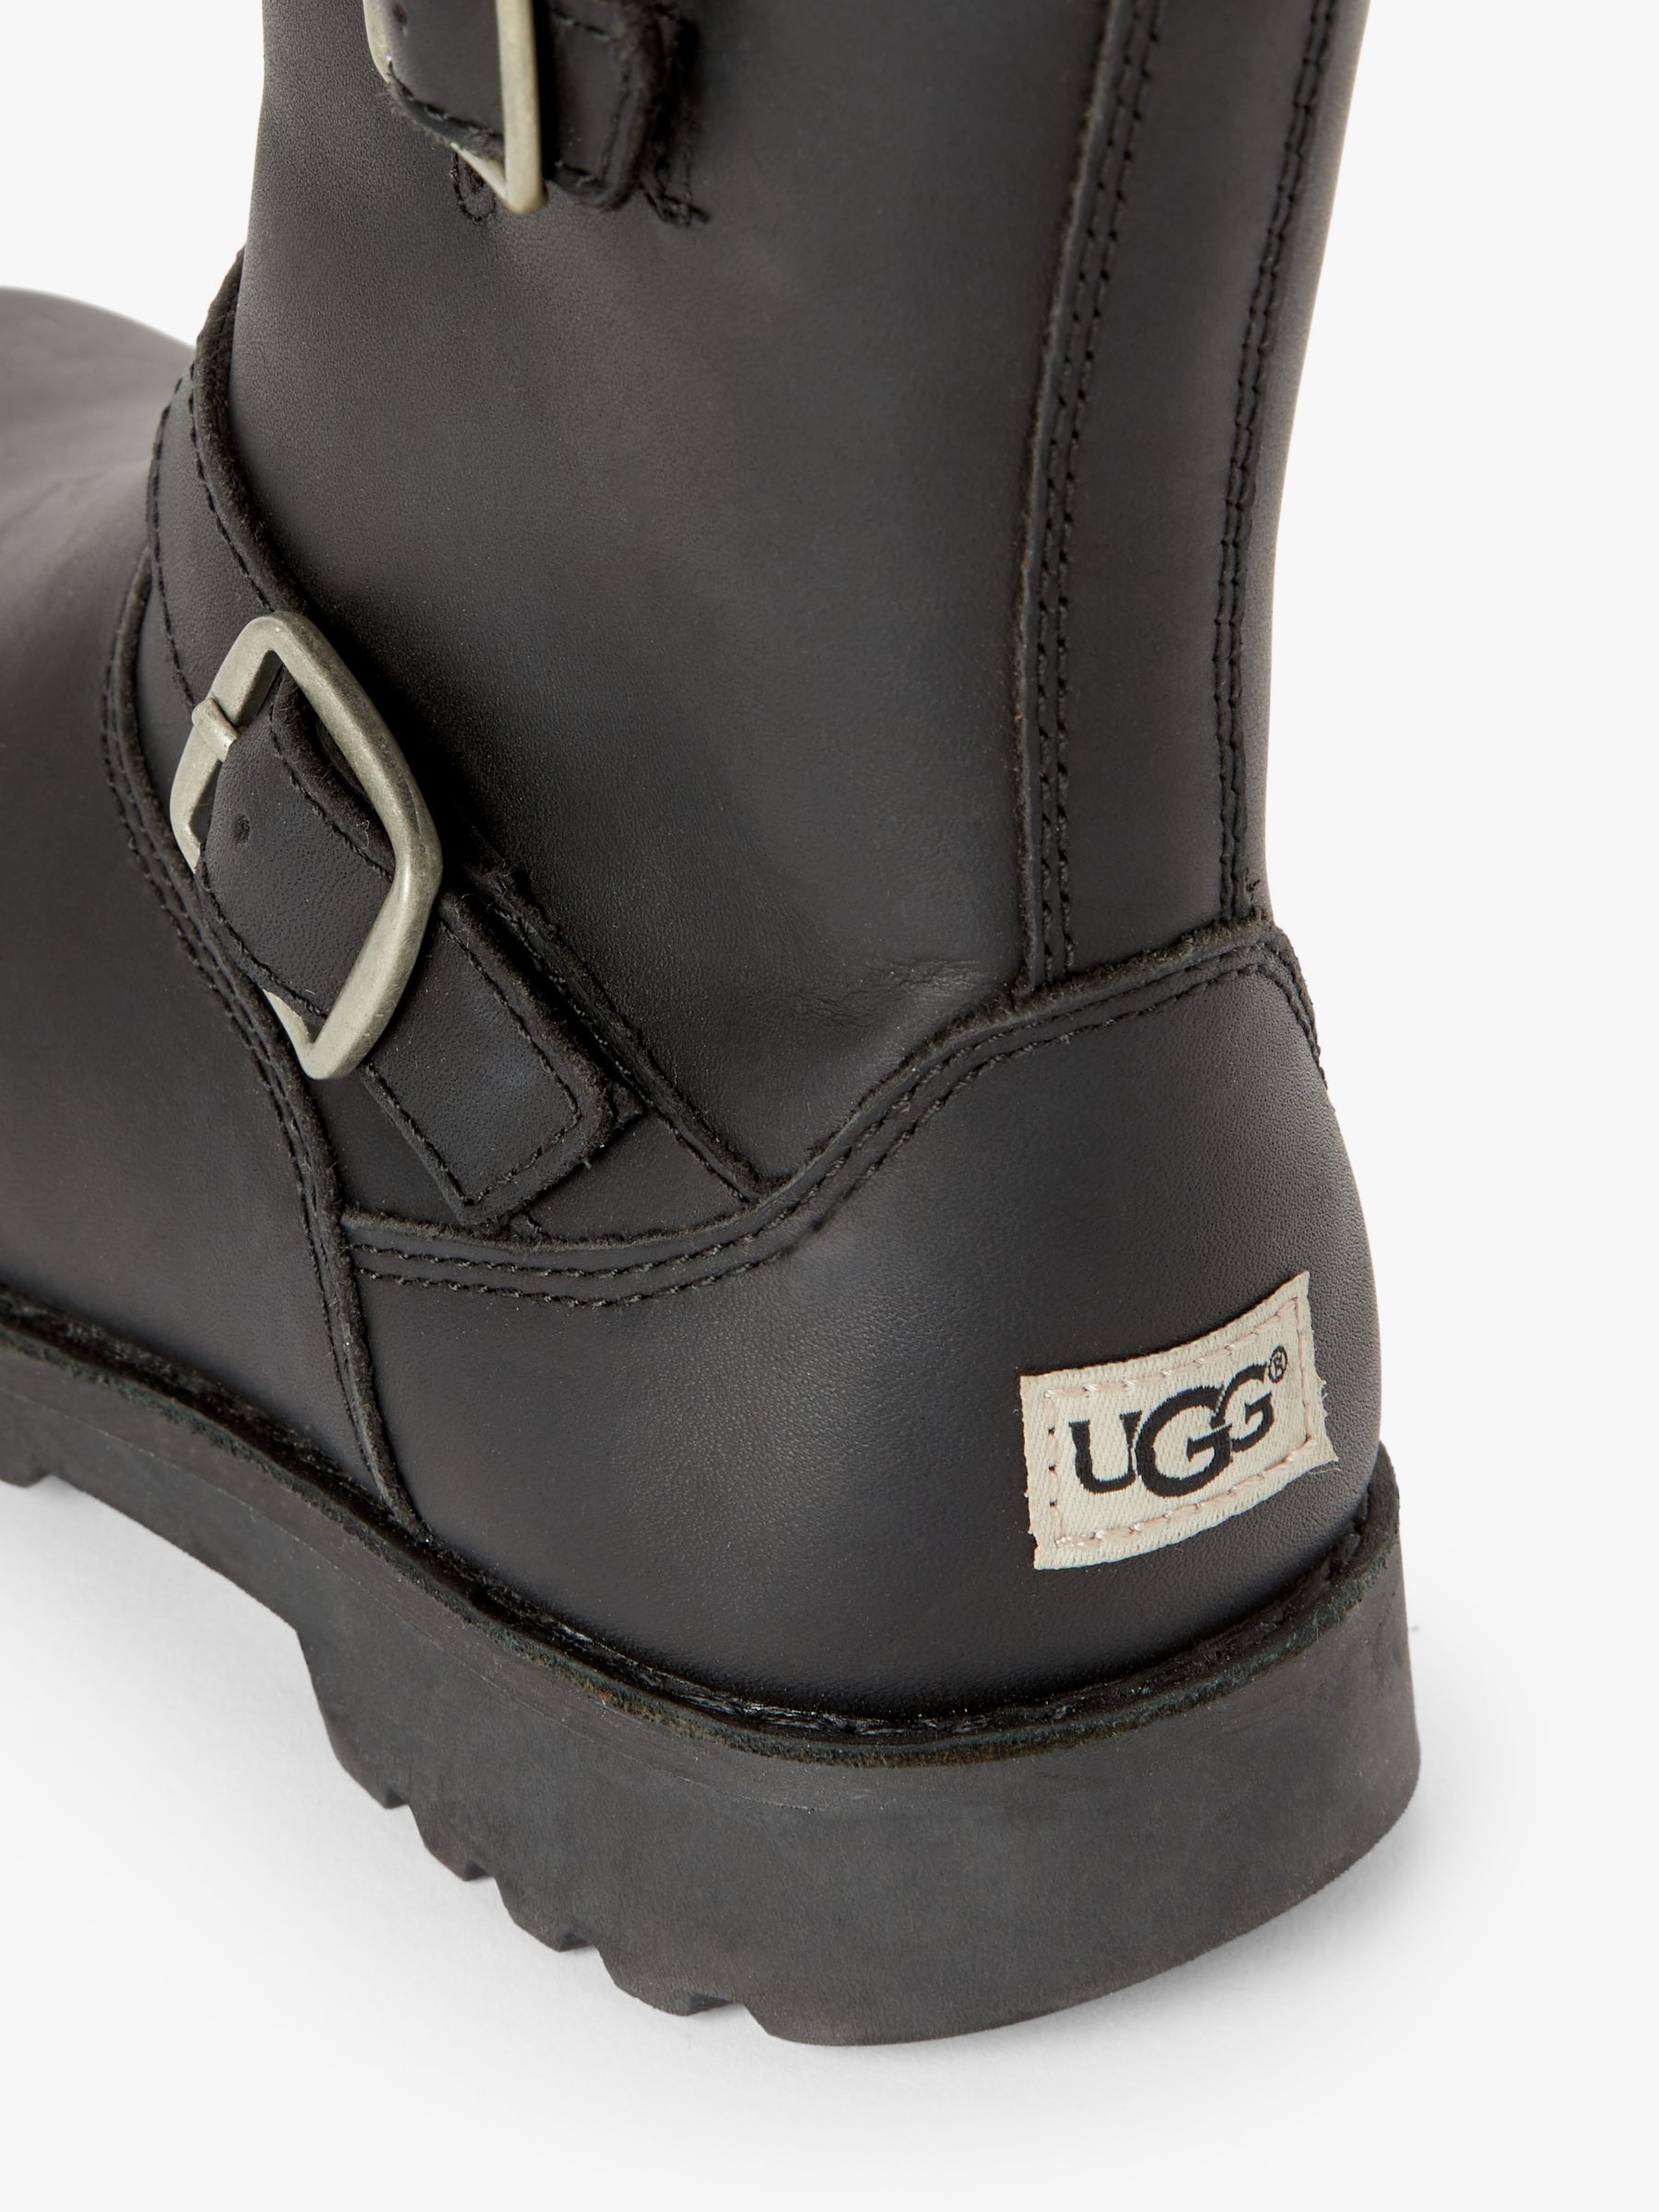 ugg black leather booties